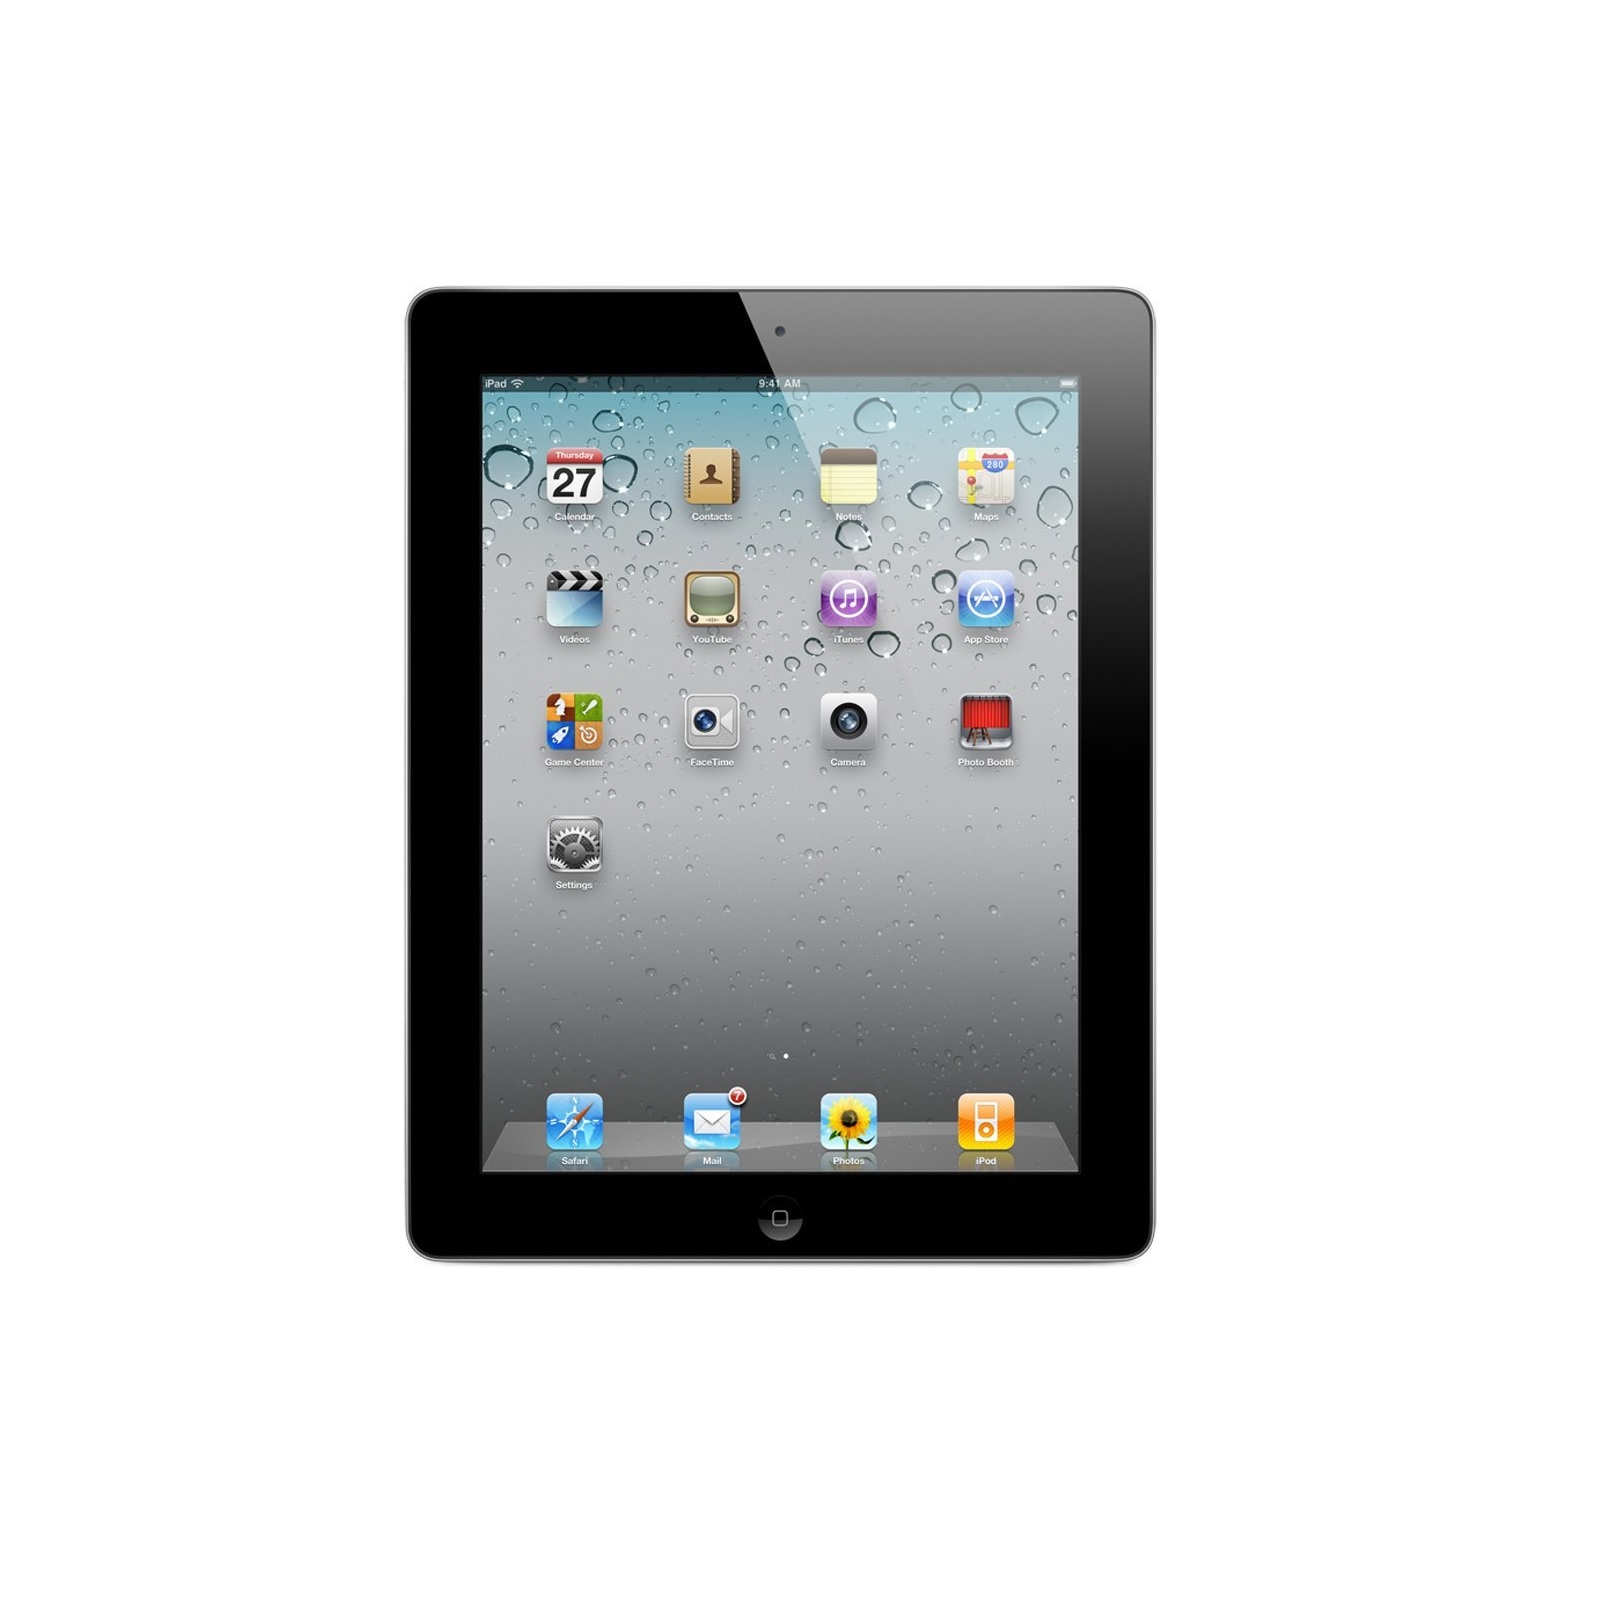 Restored Apple iPad 2 9.7inch 16GB WiFi, Black (Refurbished) - image 2 of 3